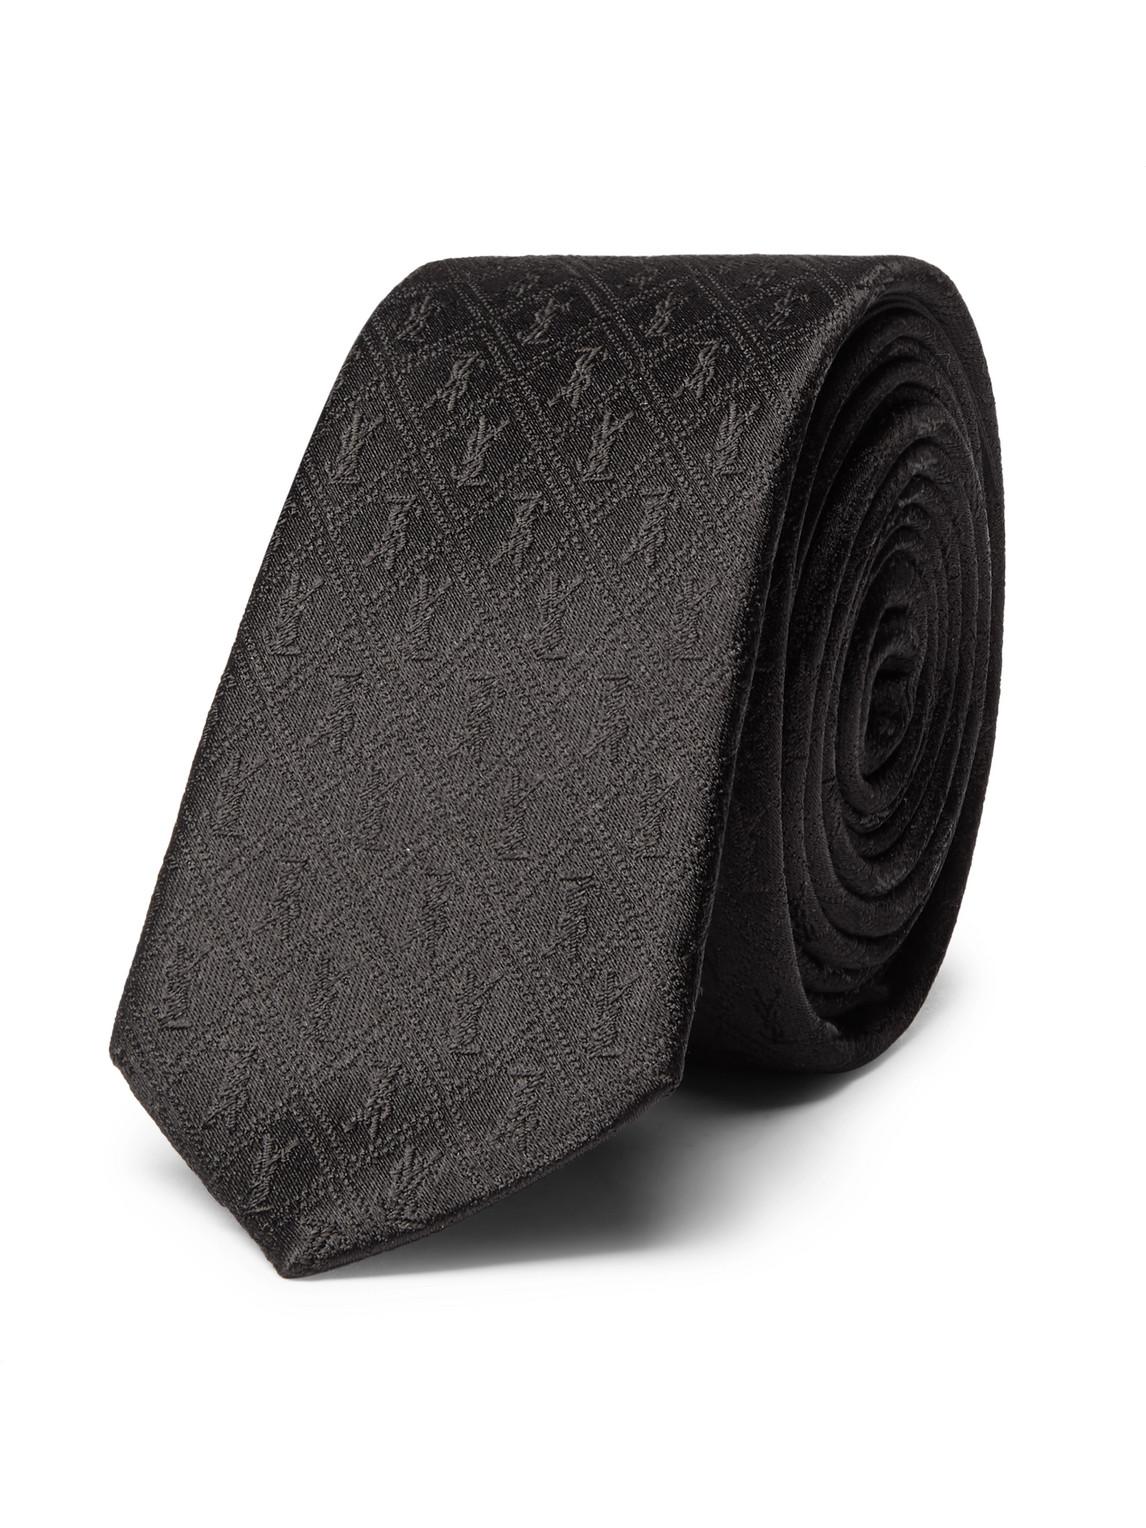 Saint Laurent 4cm Logo-jacquard Silk Tie in Black for Men - Save 